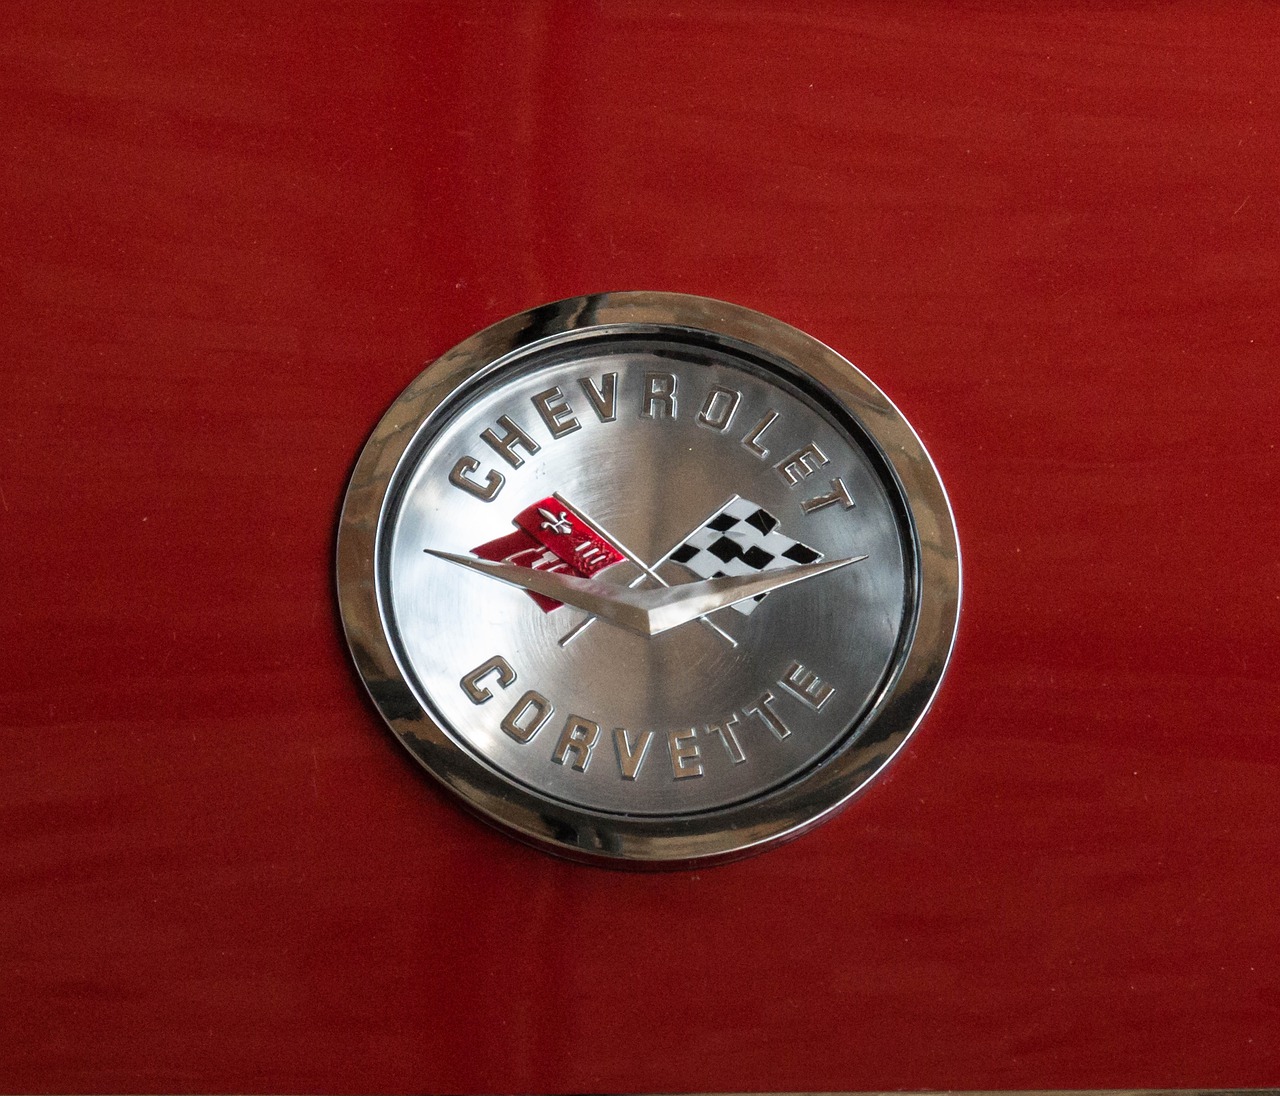 car brand chevrolet logo free photo